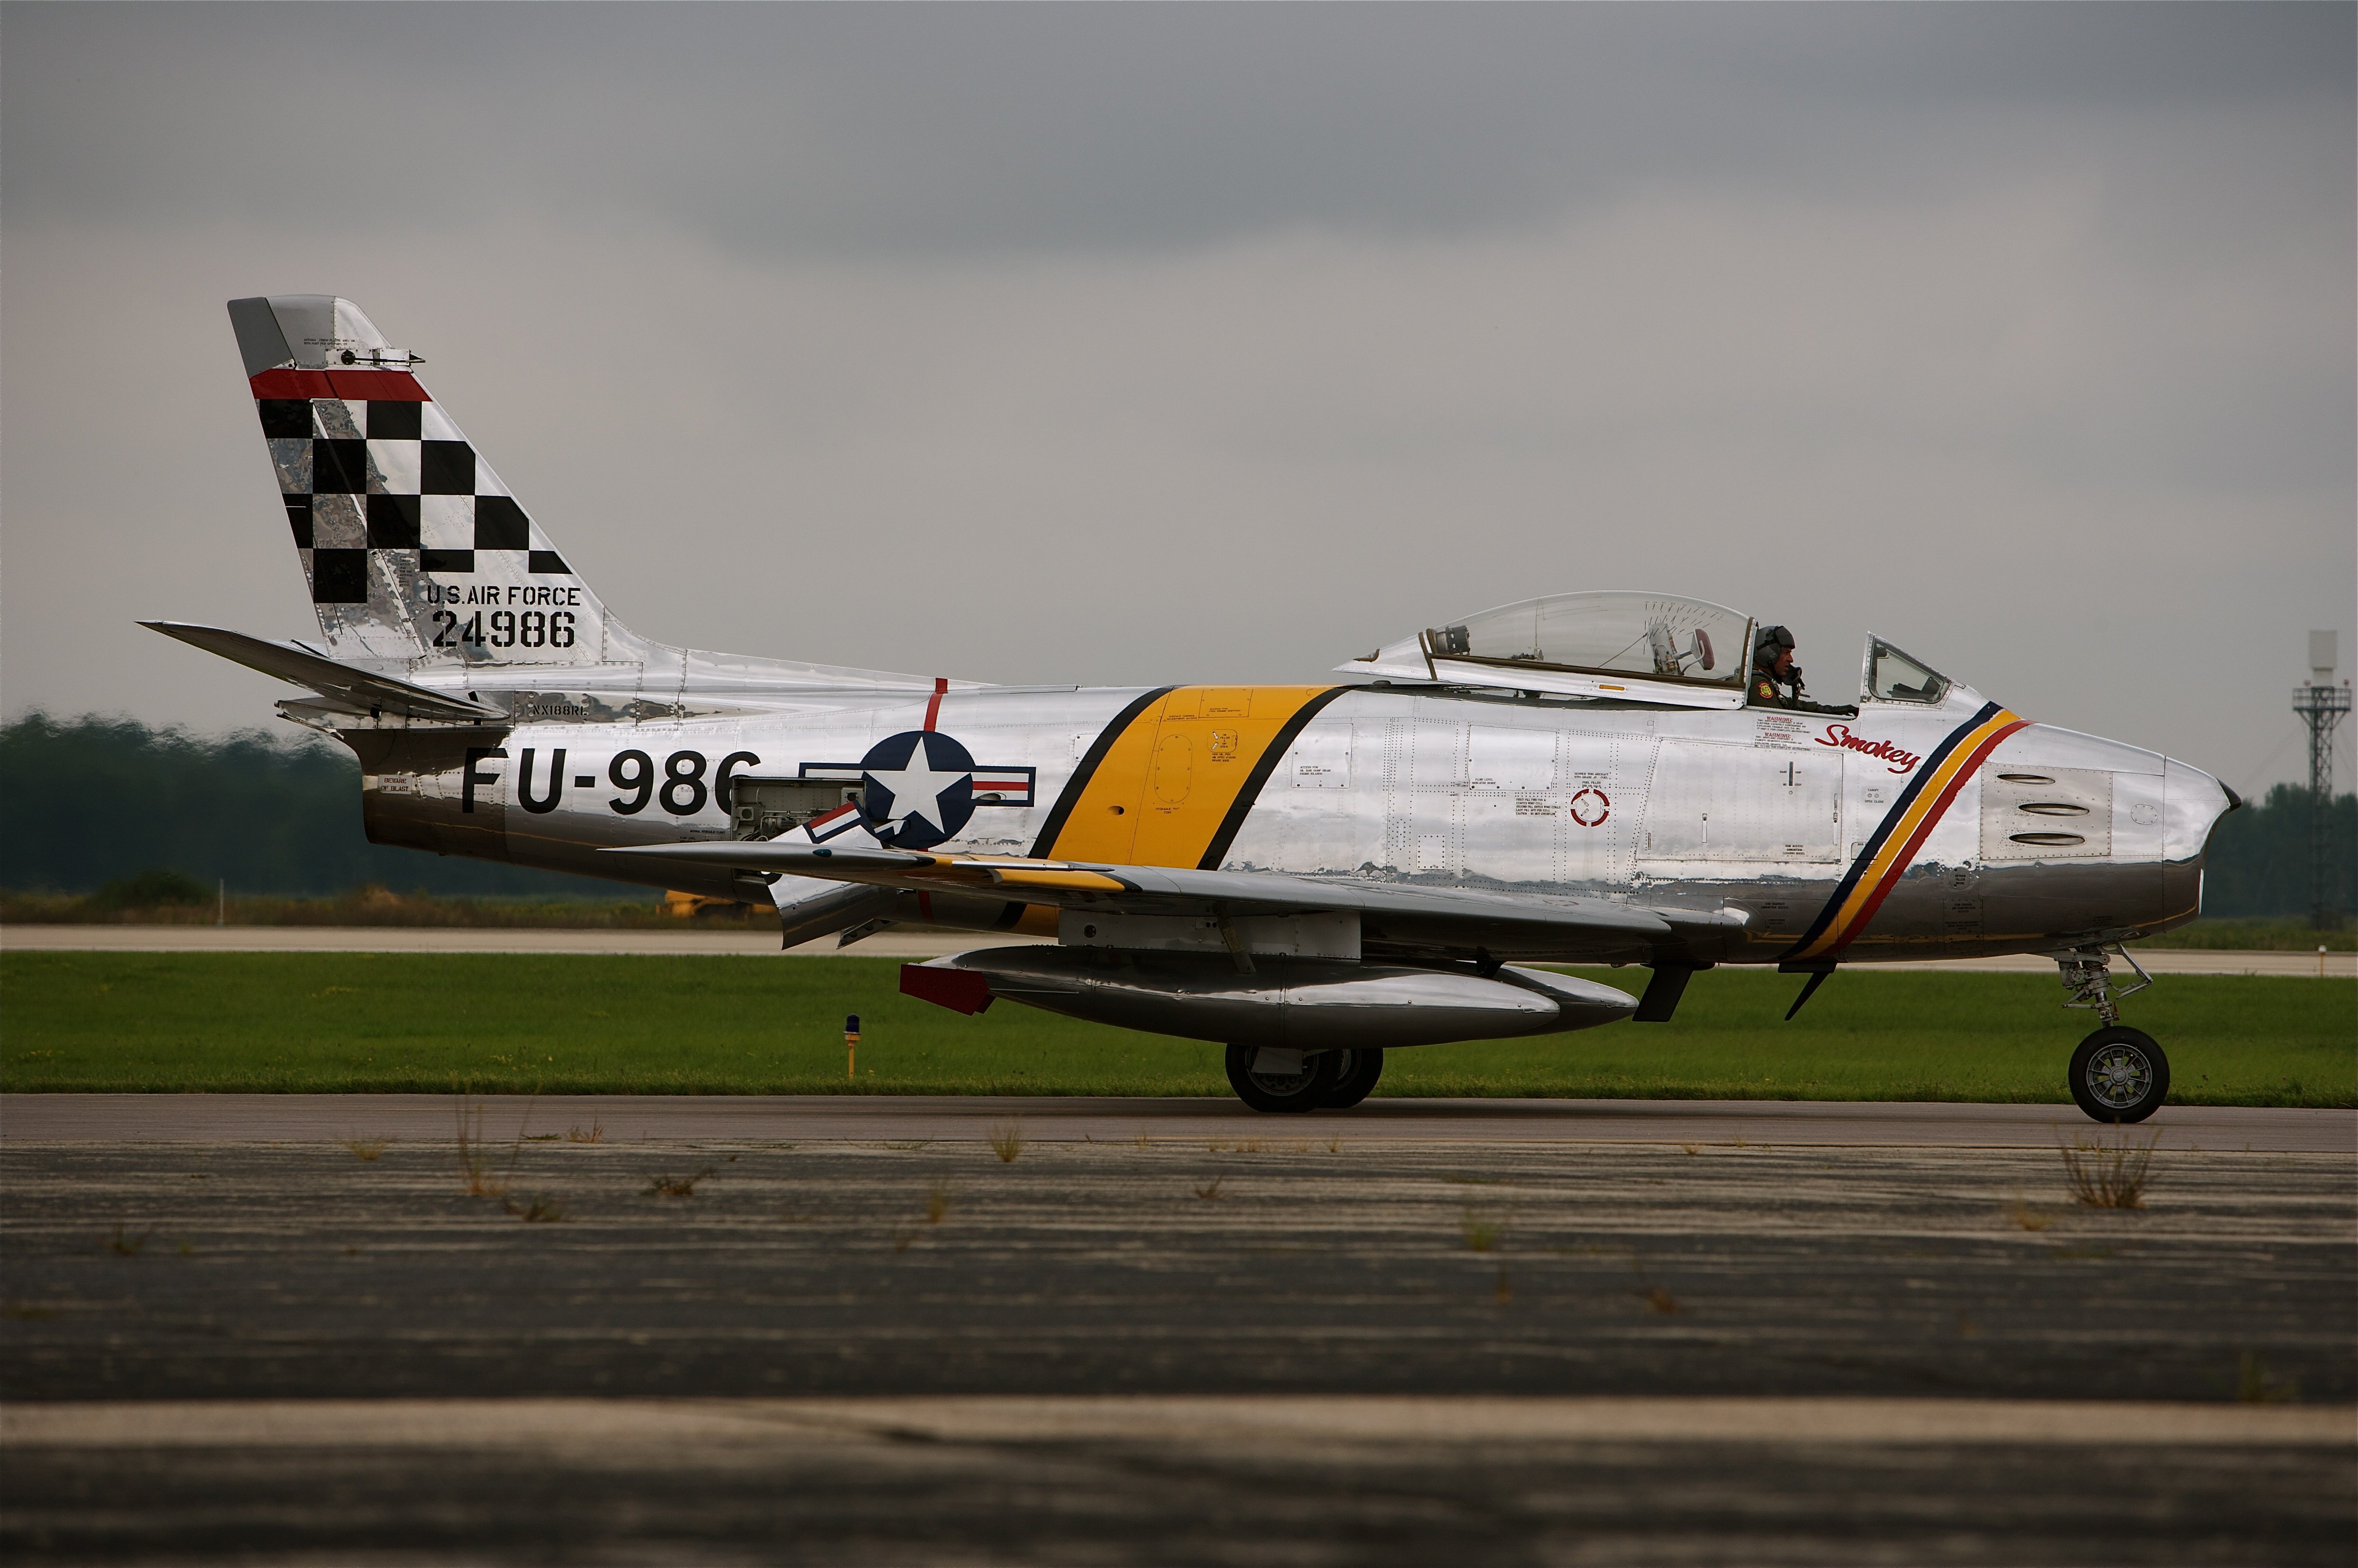 North American F-86 Sabre Wallpapers